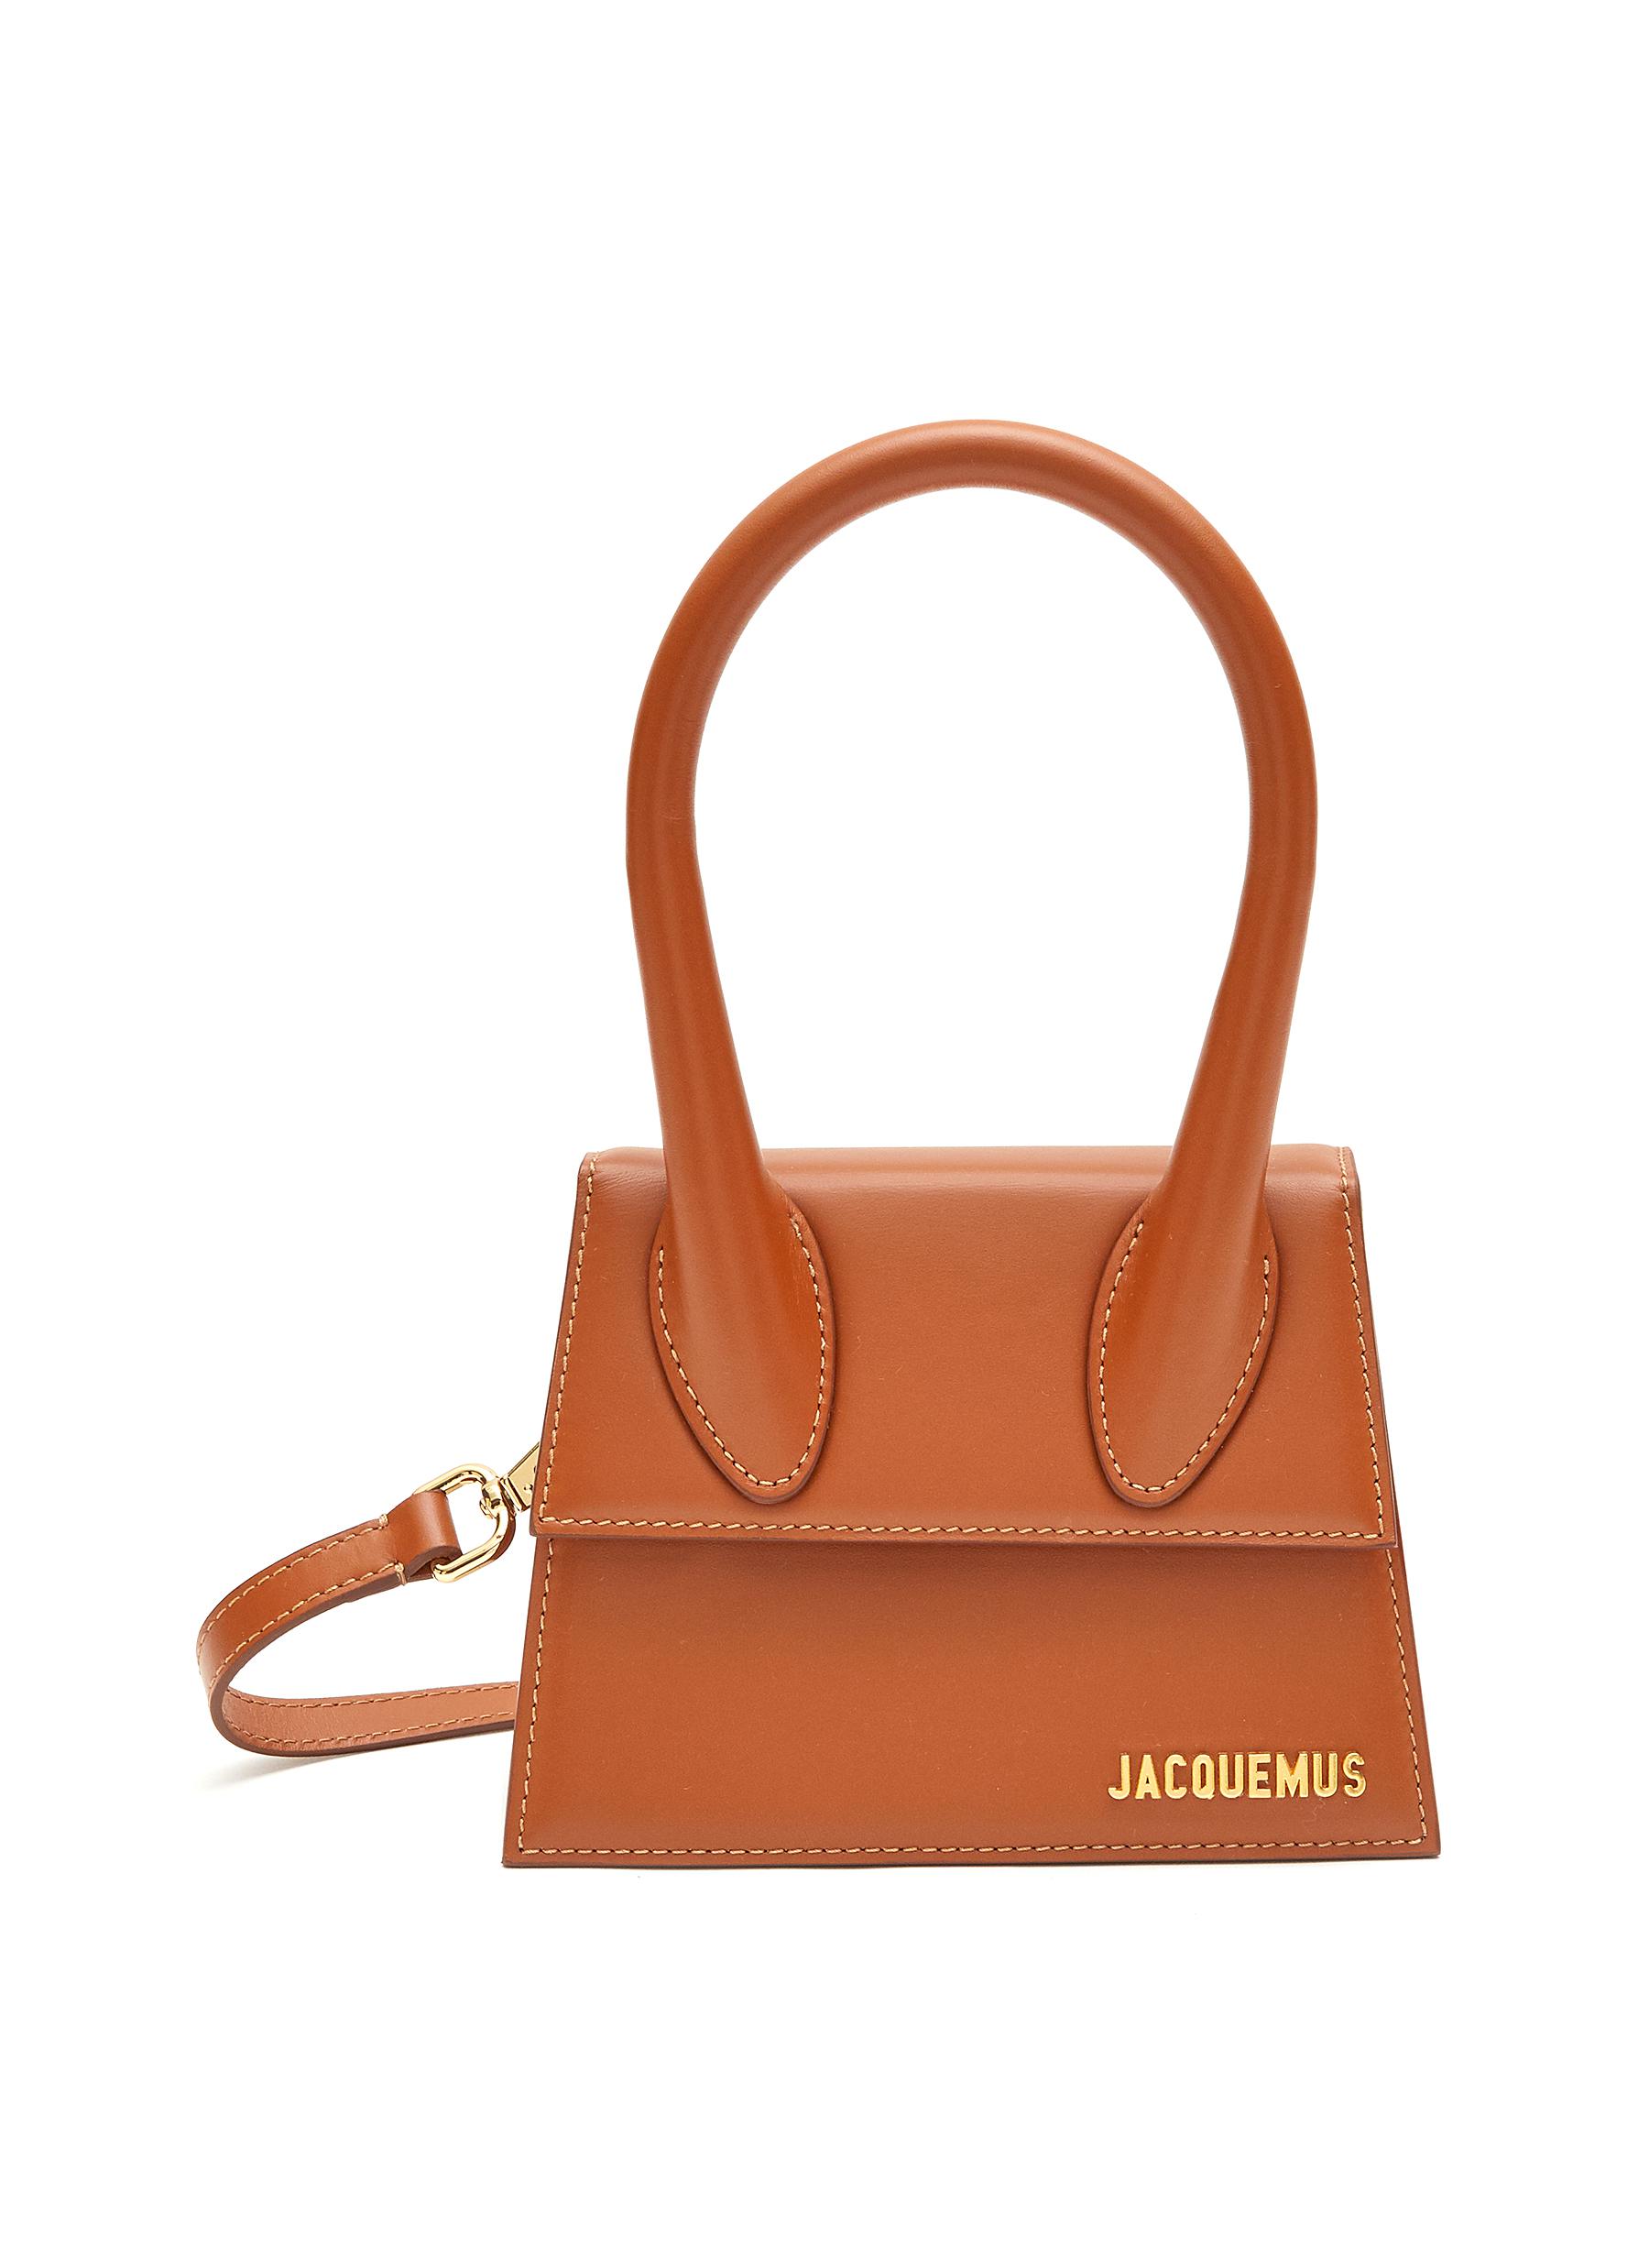 ‘Le Chiquito' Medium Leather Shoulder Bag